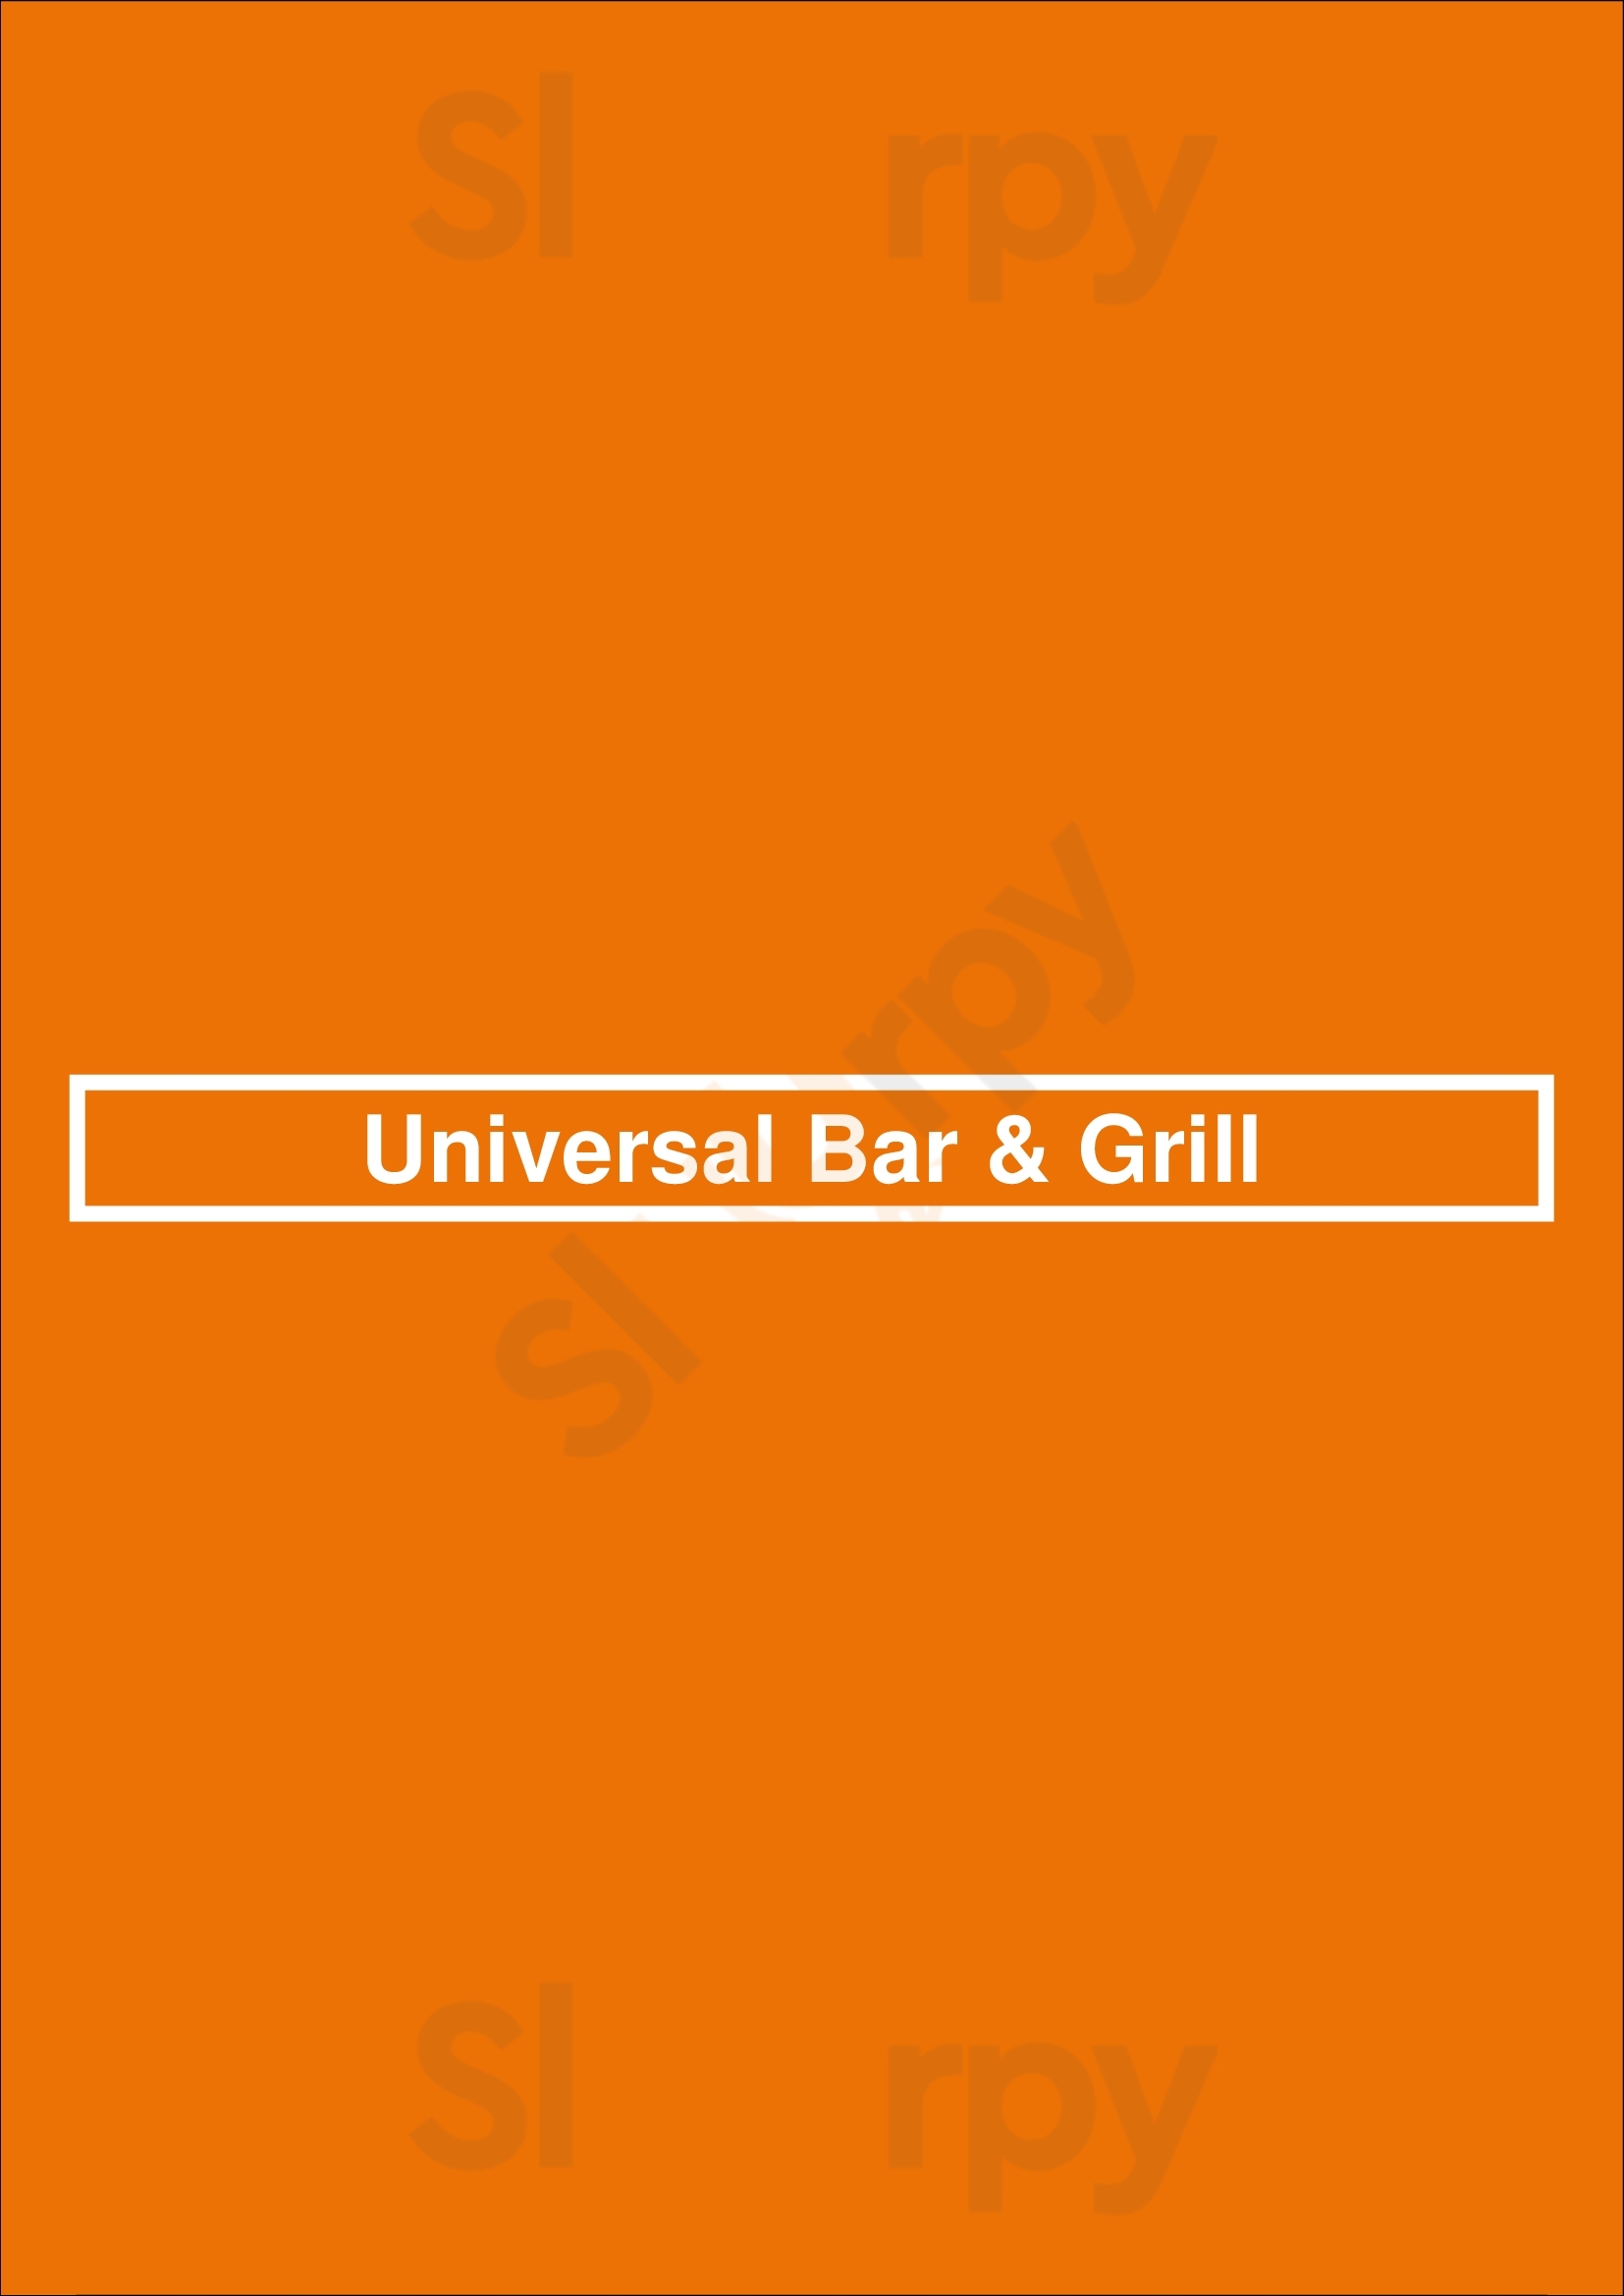 Universal Bar & Grill Los Angeles Menu - 1